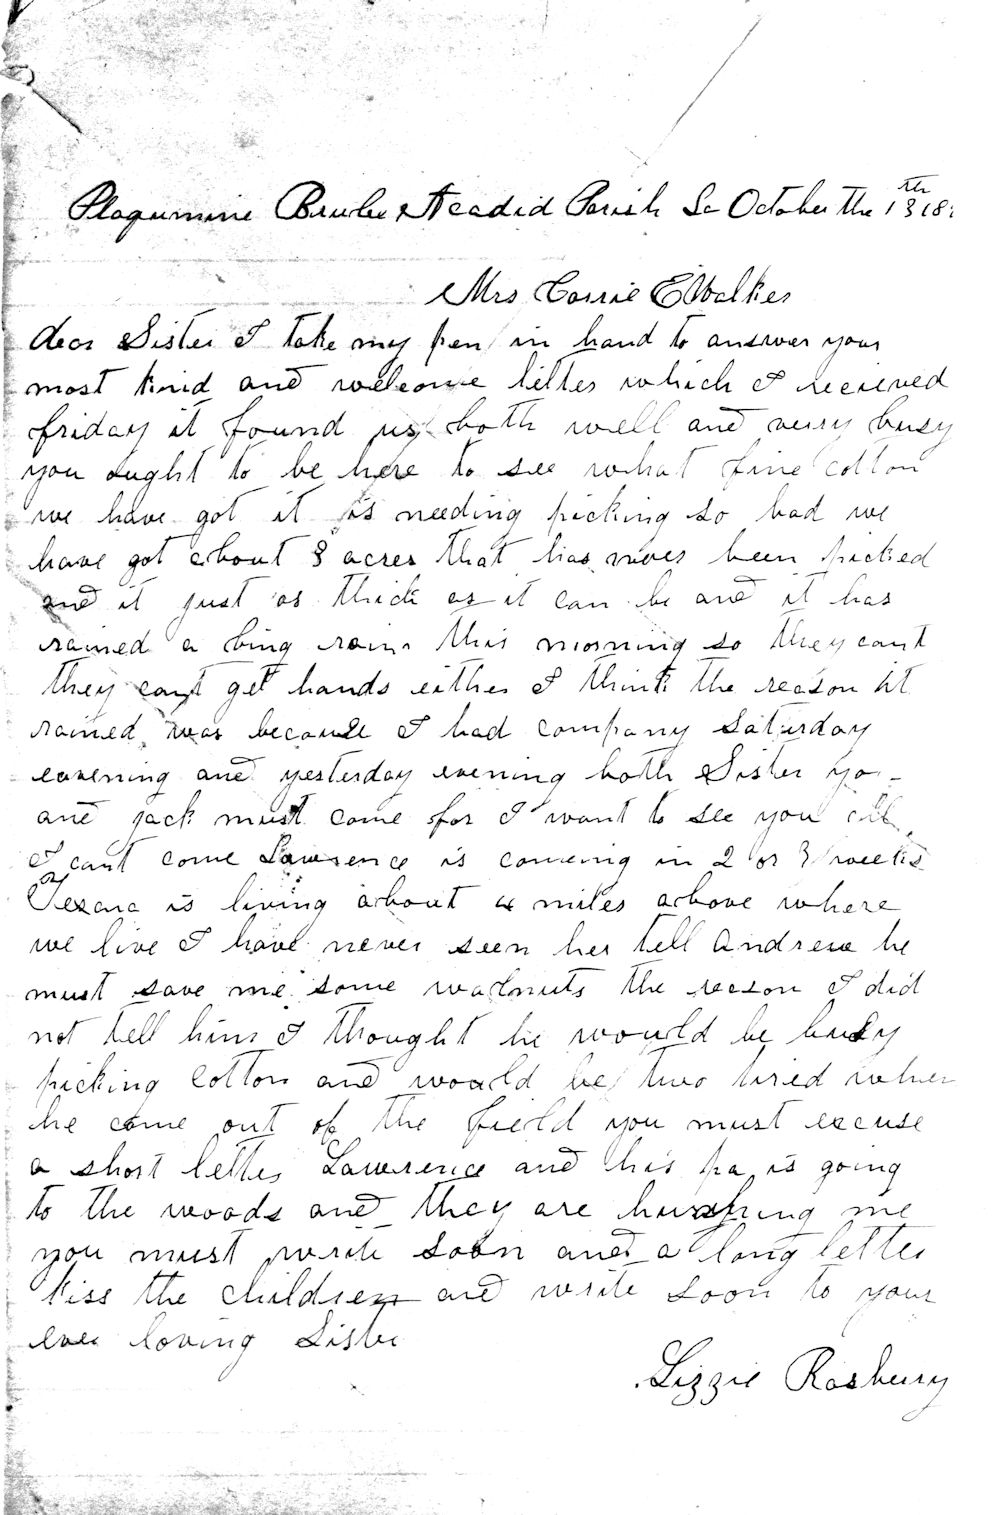 Lizzie Emma Helmer Rasberry letter to Caroline Elmira Helmer Walker - 1889